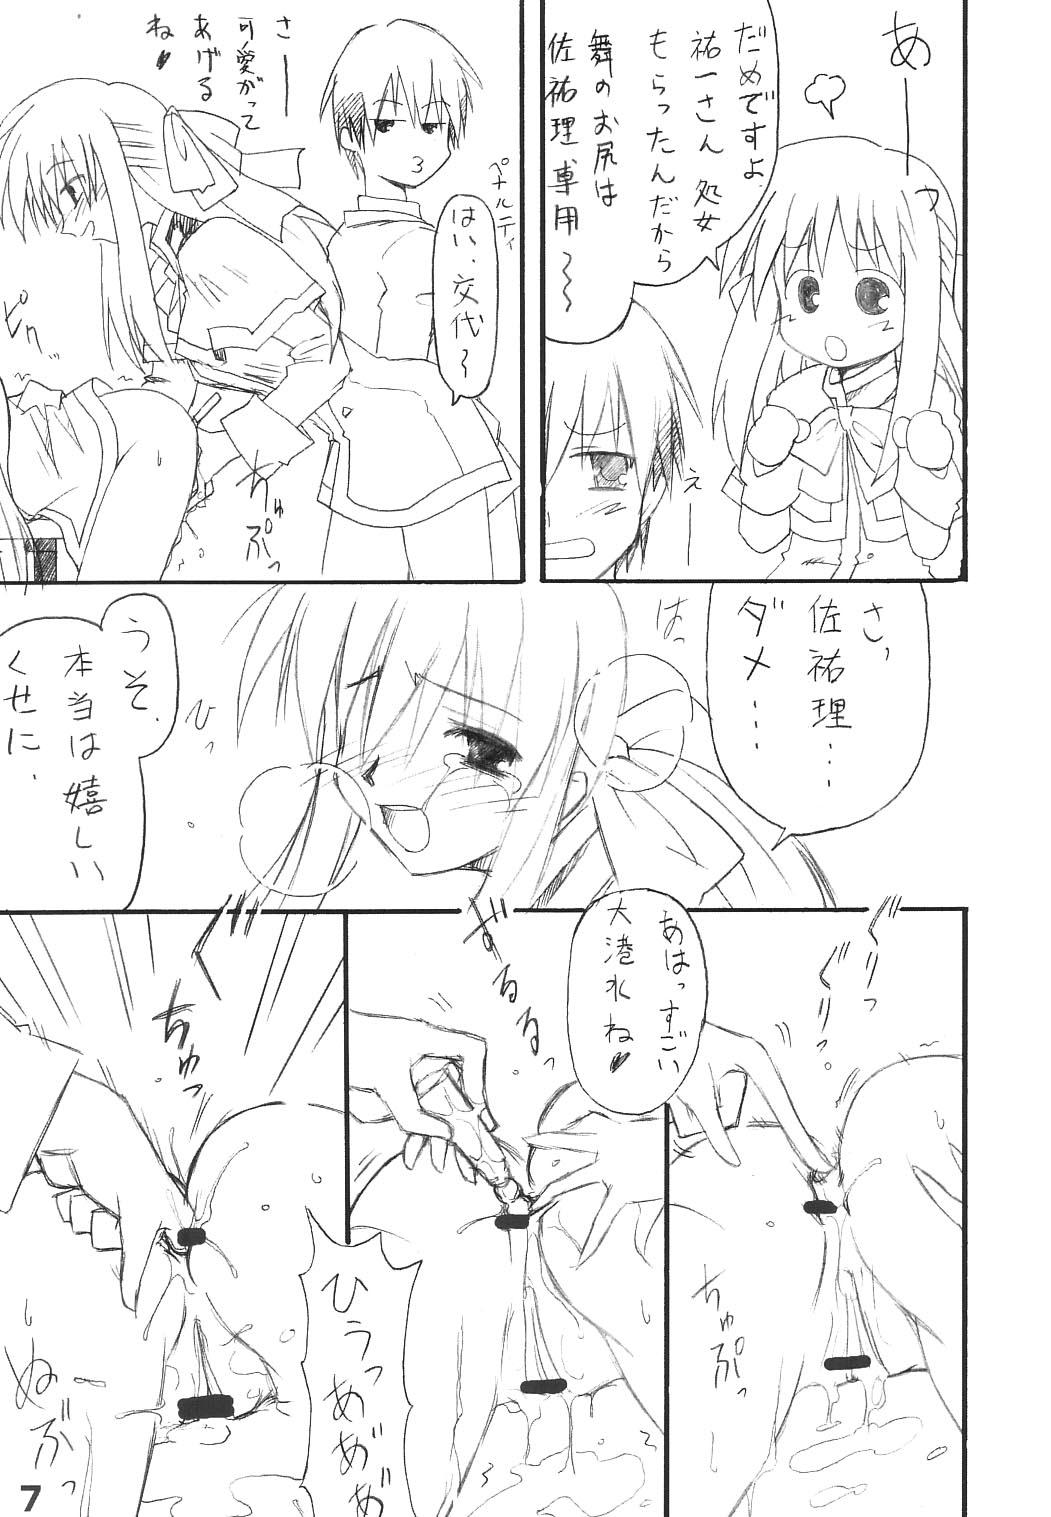 Bribe Minna no Usagi - Kanon Solo Girl - Page 6